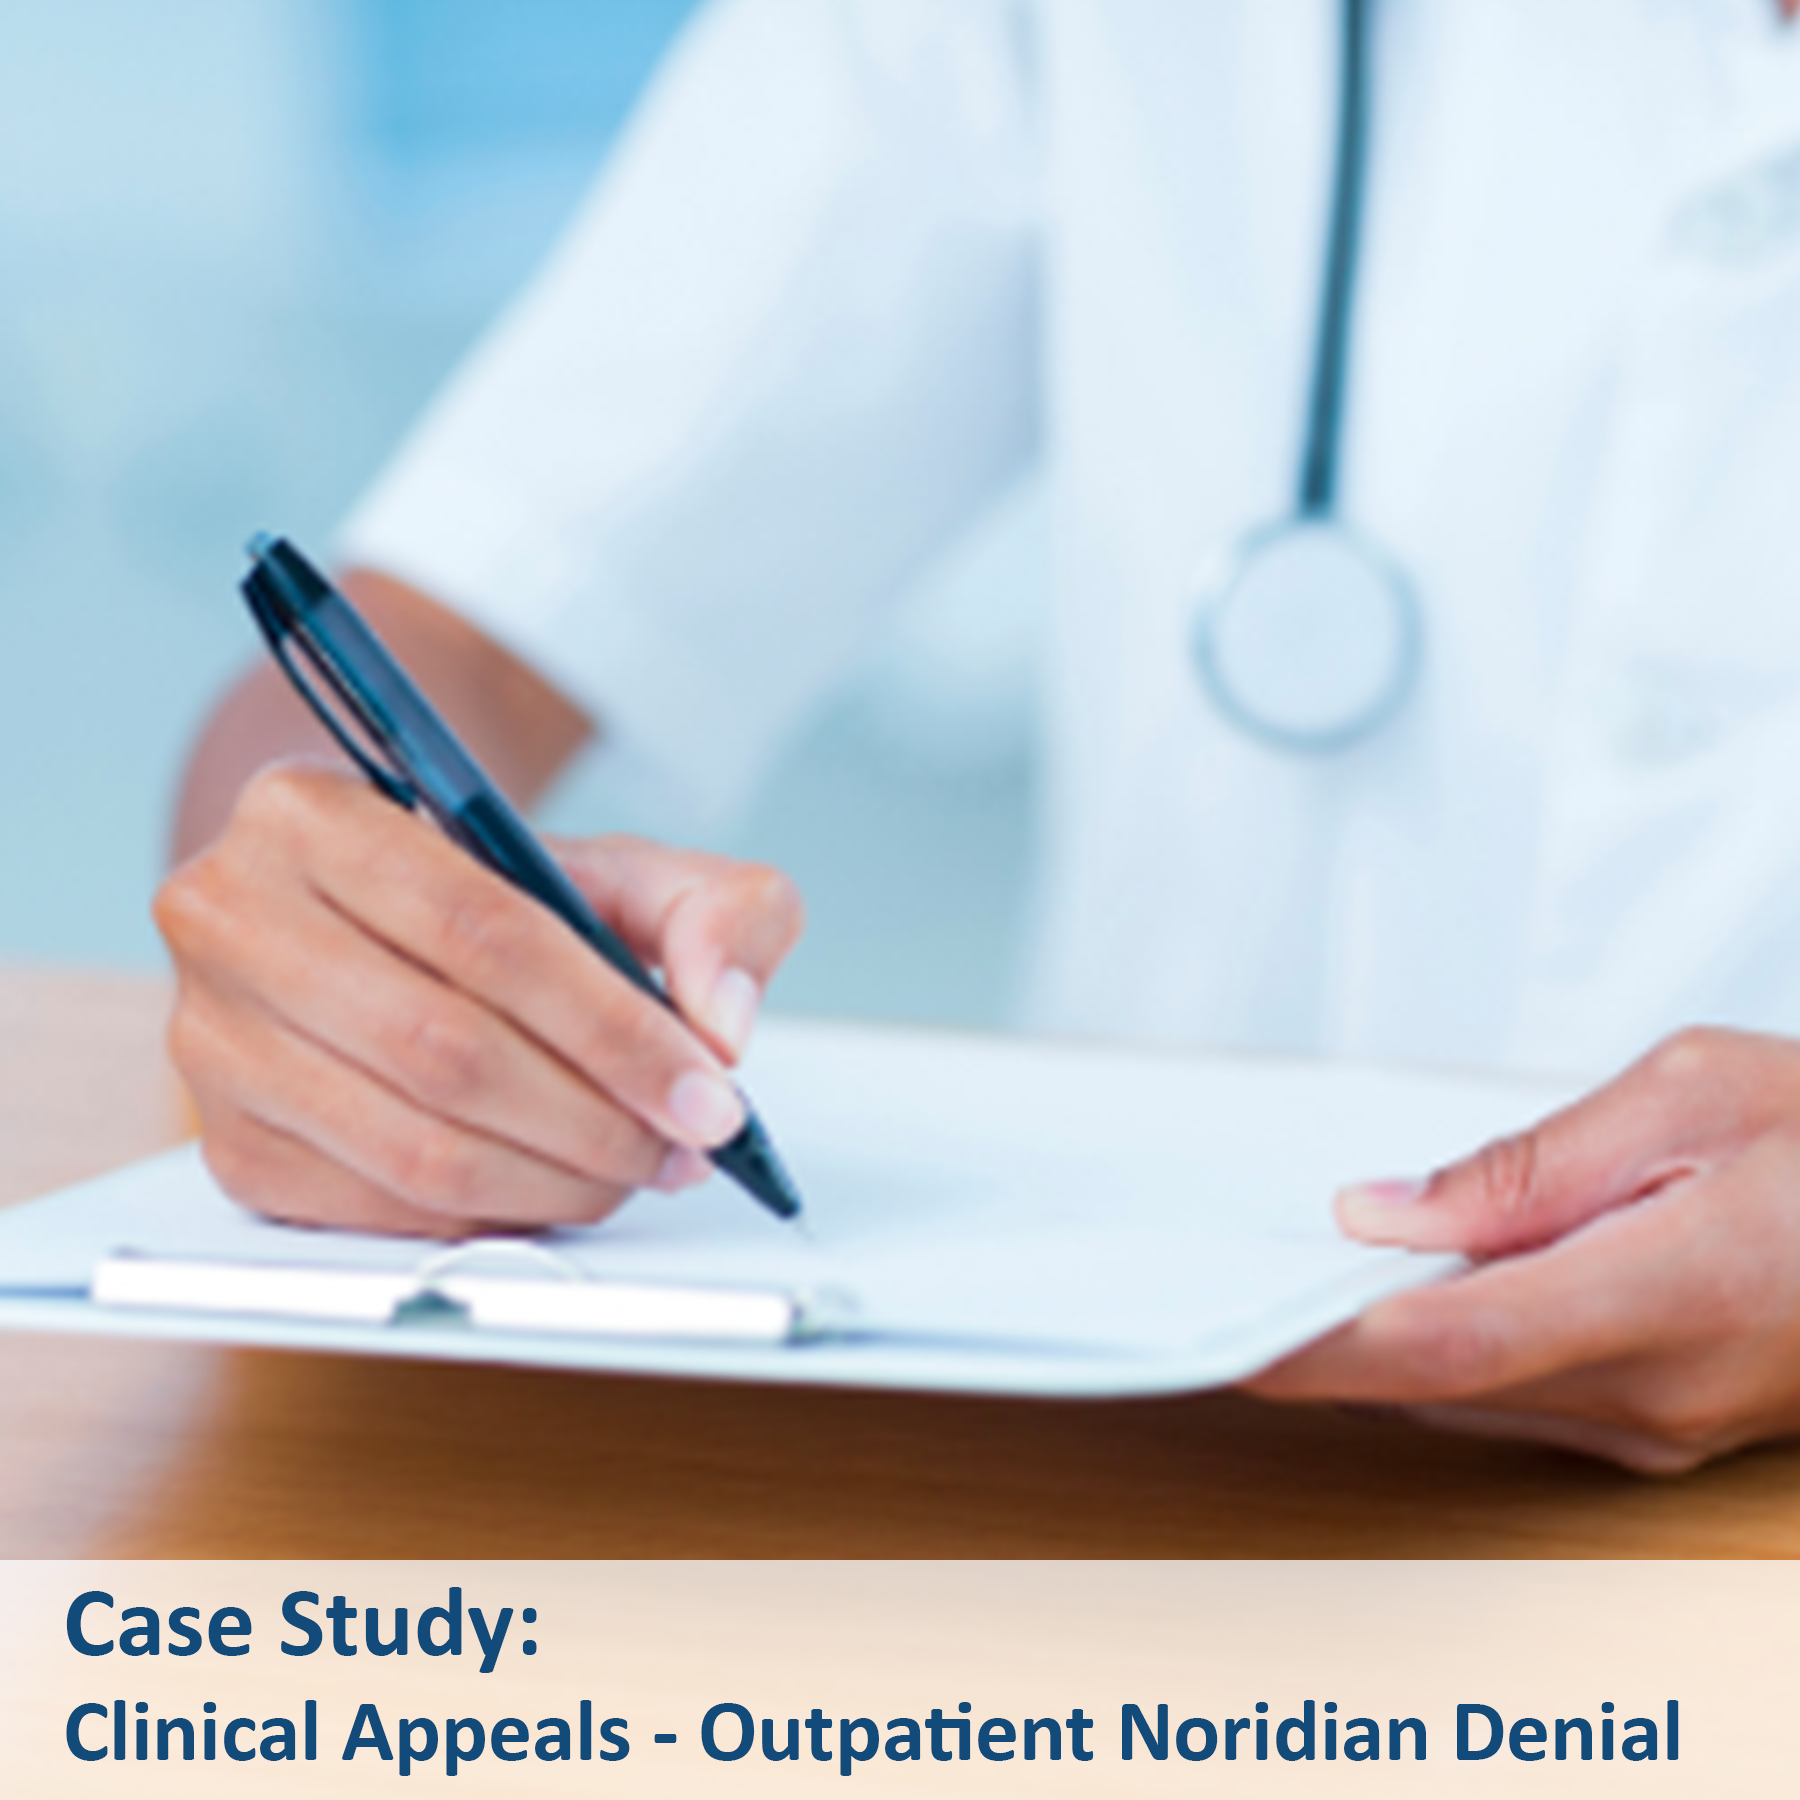 Case Study - Clinical Appeals - Outpatient Noridian Denial